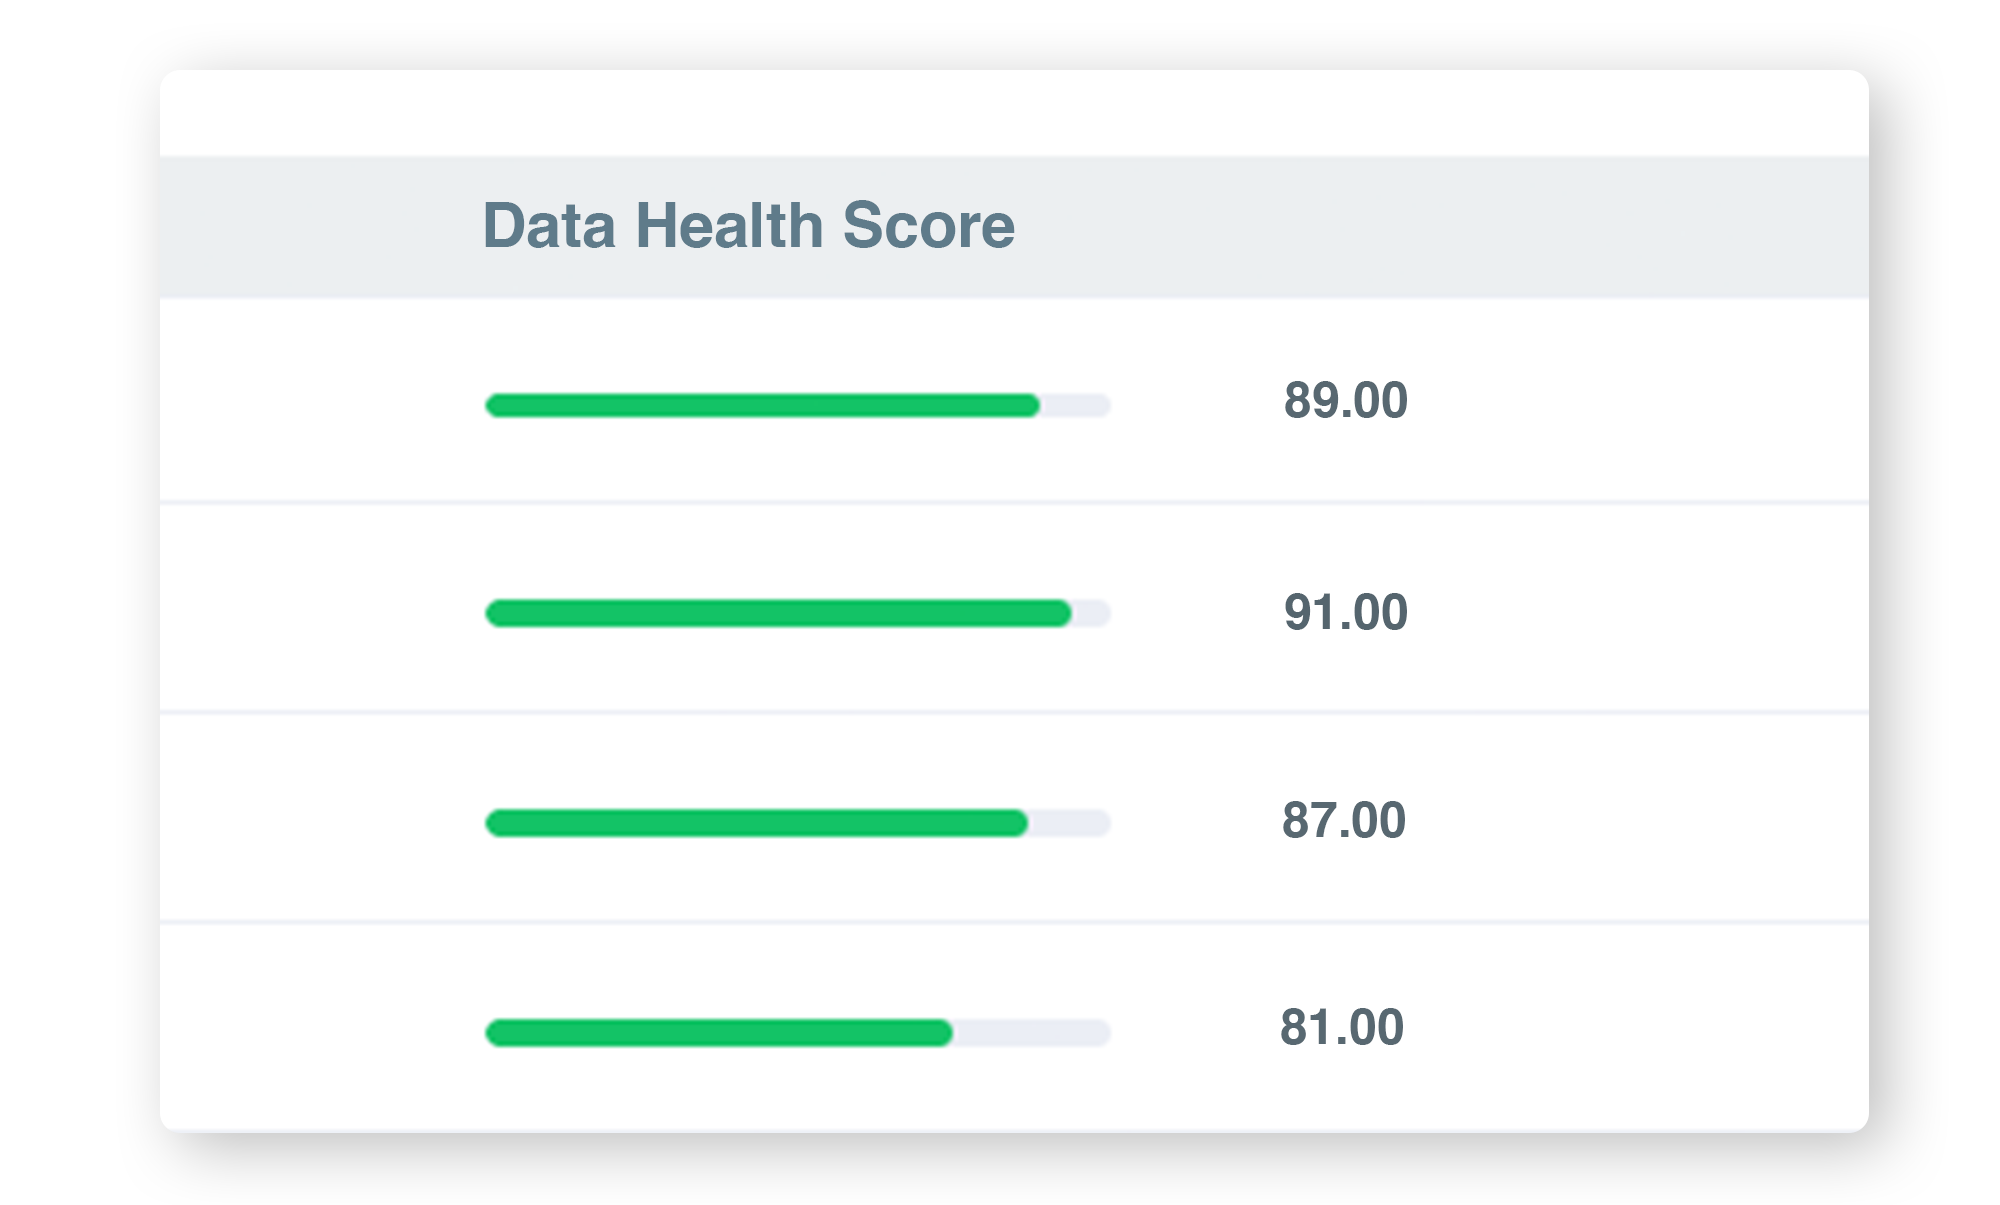 Data health